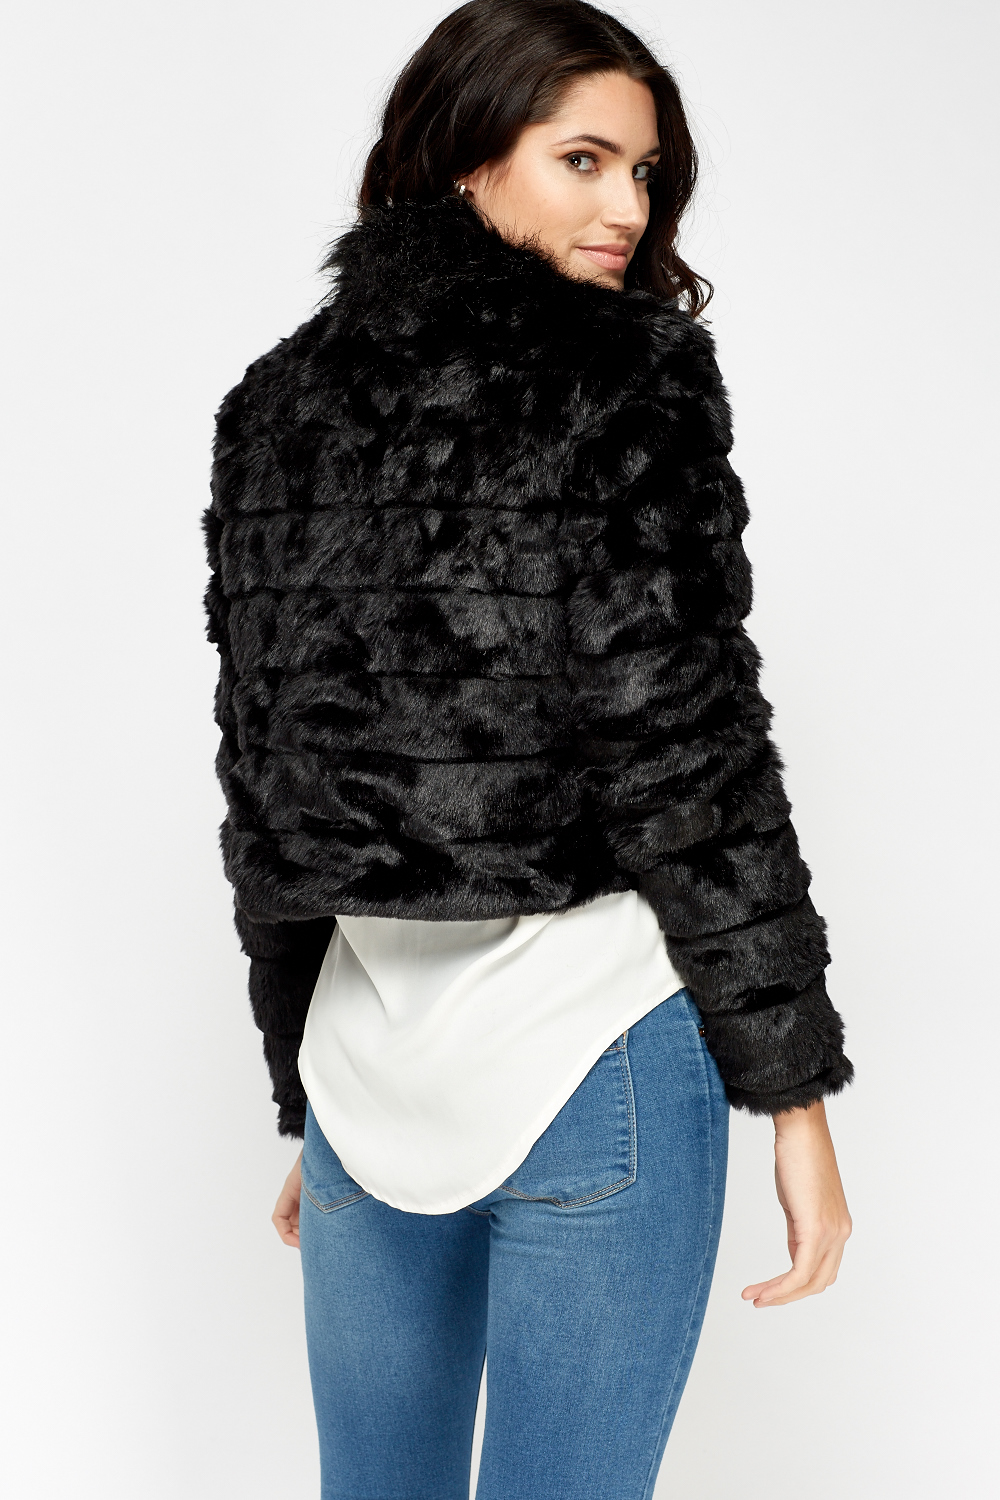 Faux Fur Cropped Jacket - Just $7